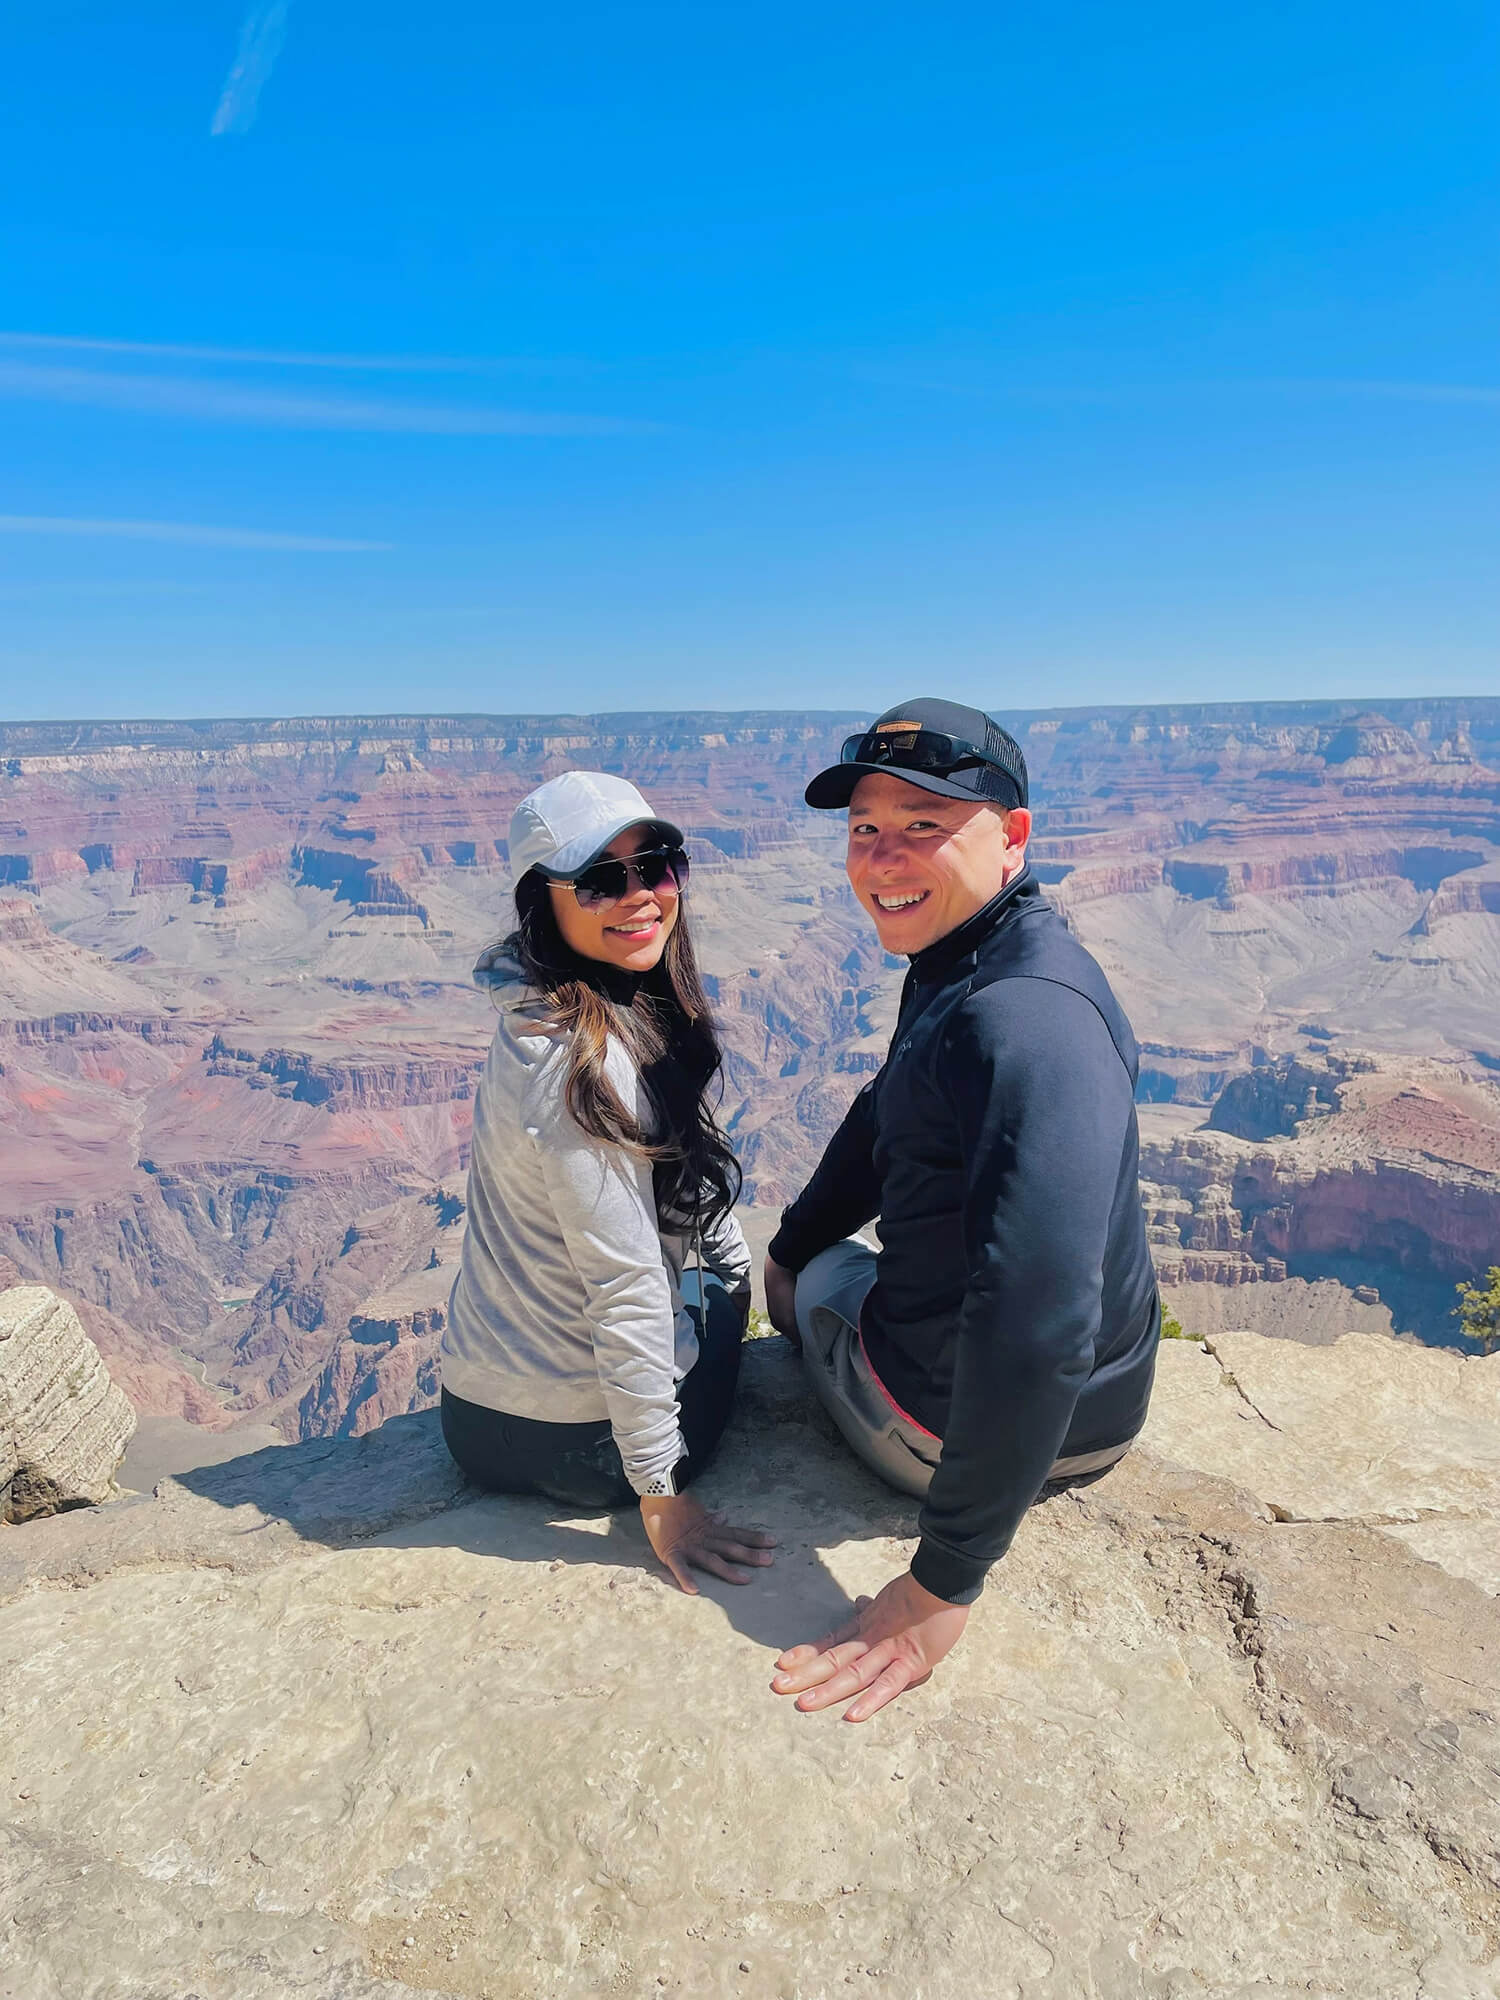 Andrew & Carmela, hiking the Grand Canyon in Arizona